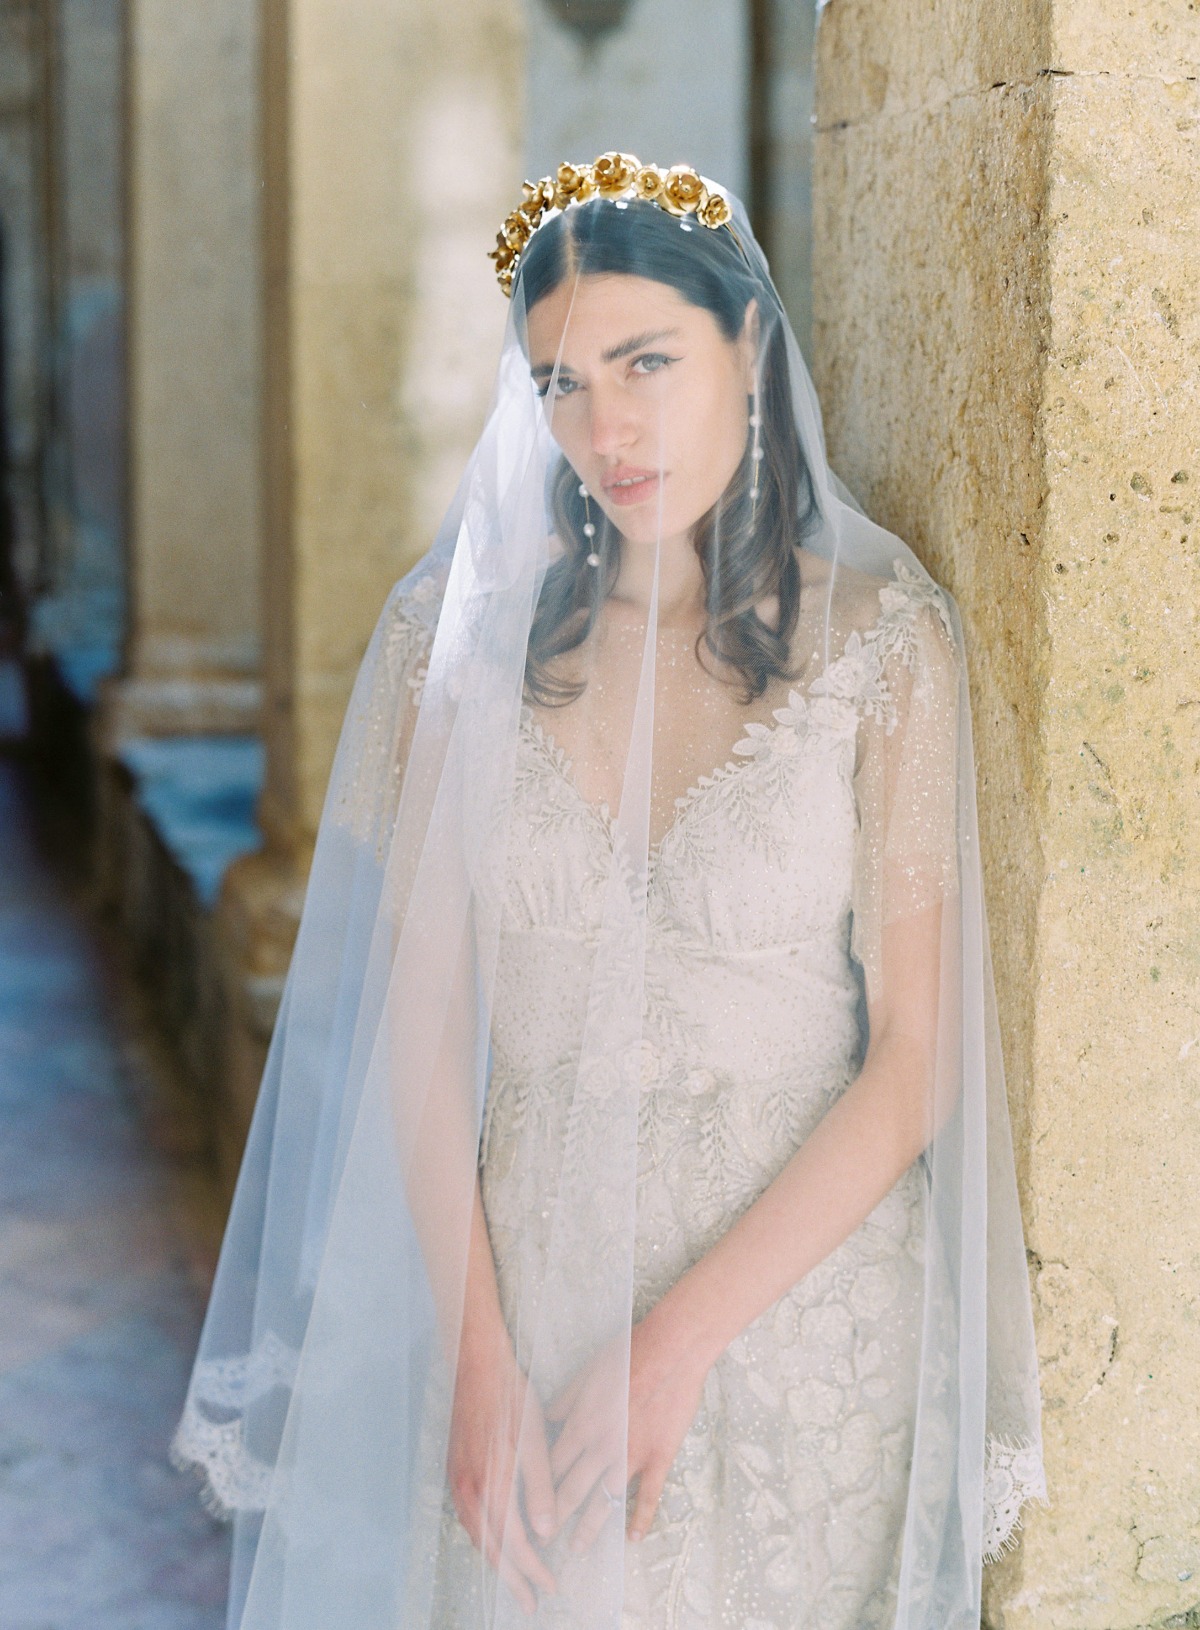 Dreamy Italian bride in ethereal Claire Pettibone wedding dress